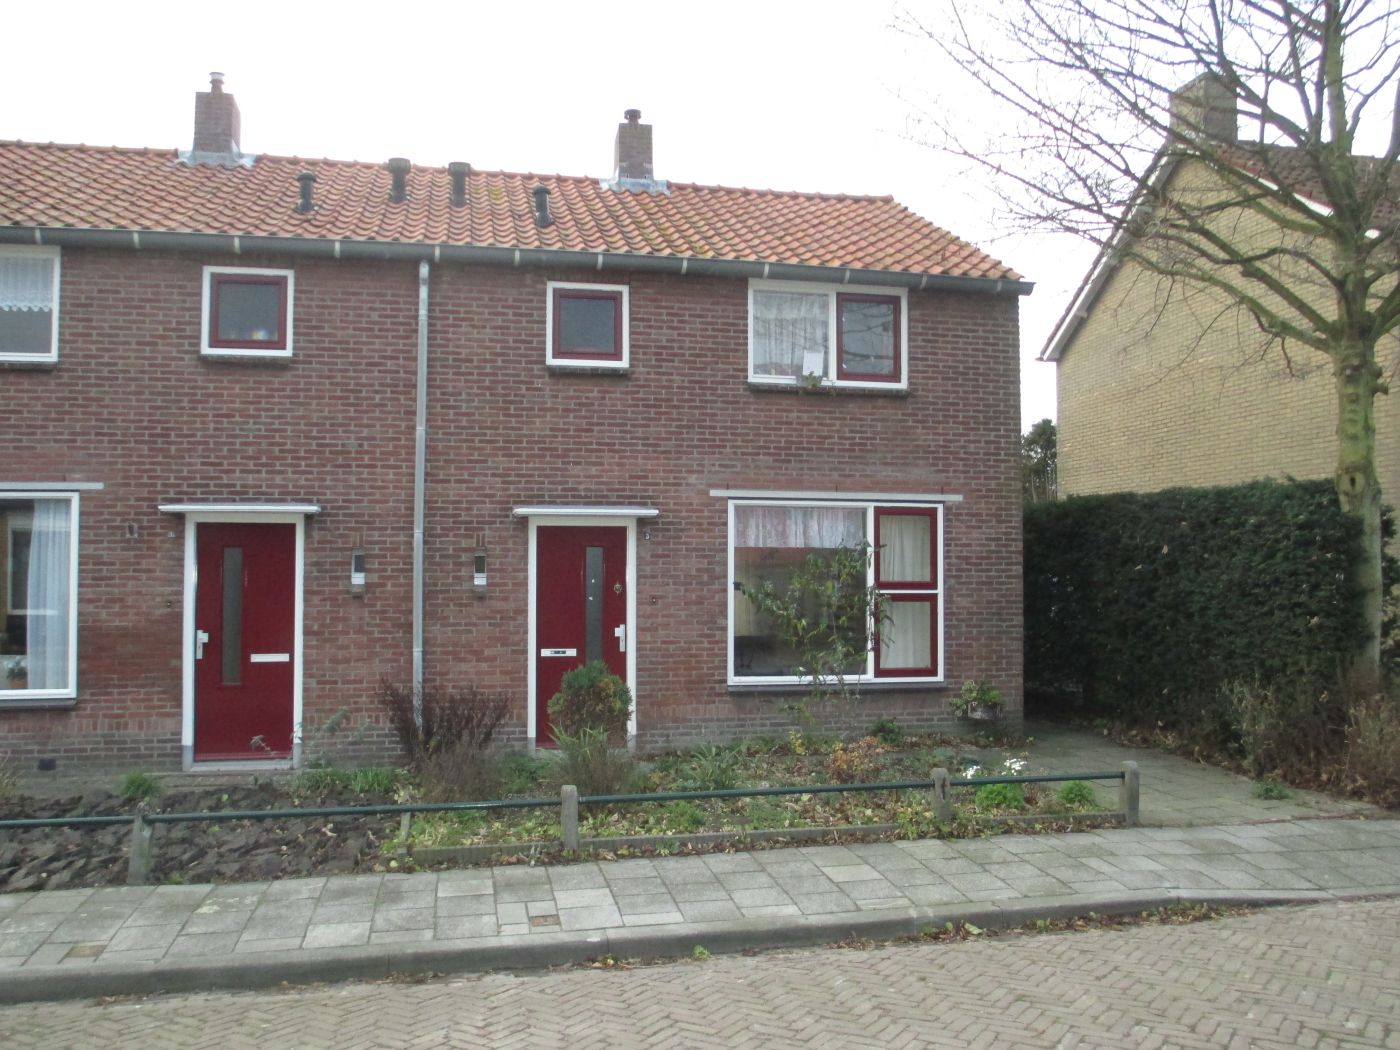 Blokhuisstraat 3, 4474 AL Kattendijke, Nederland